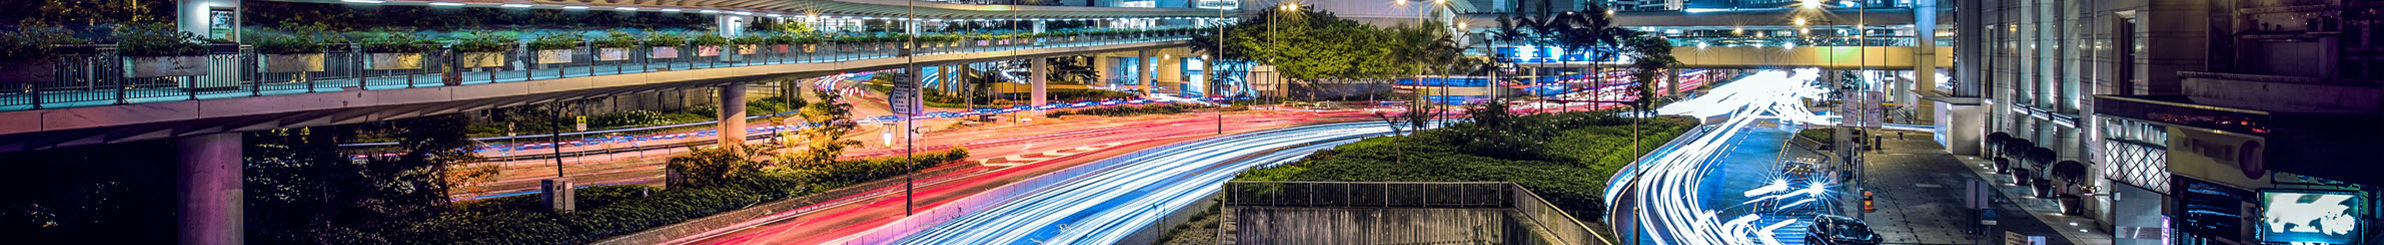 City traffic at night